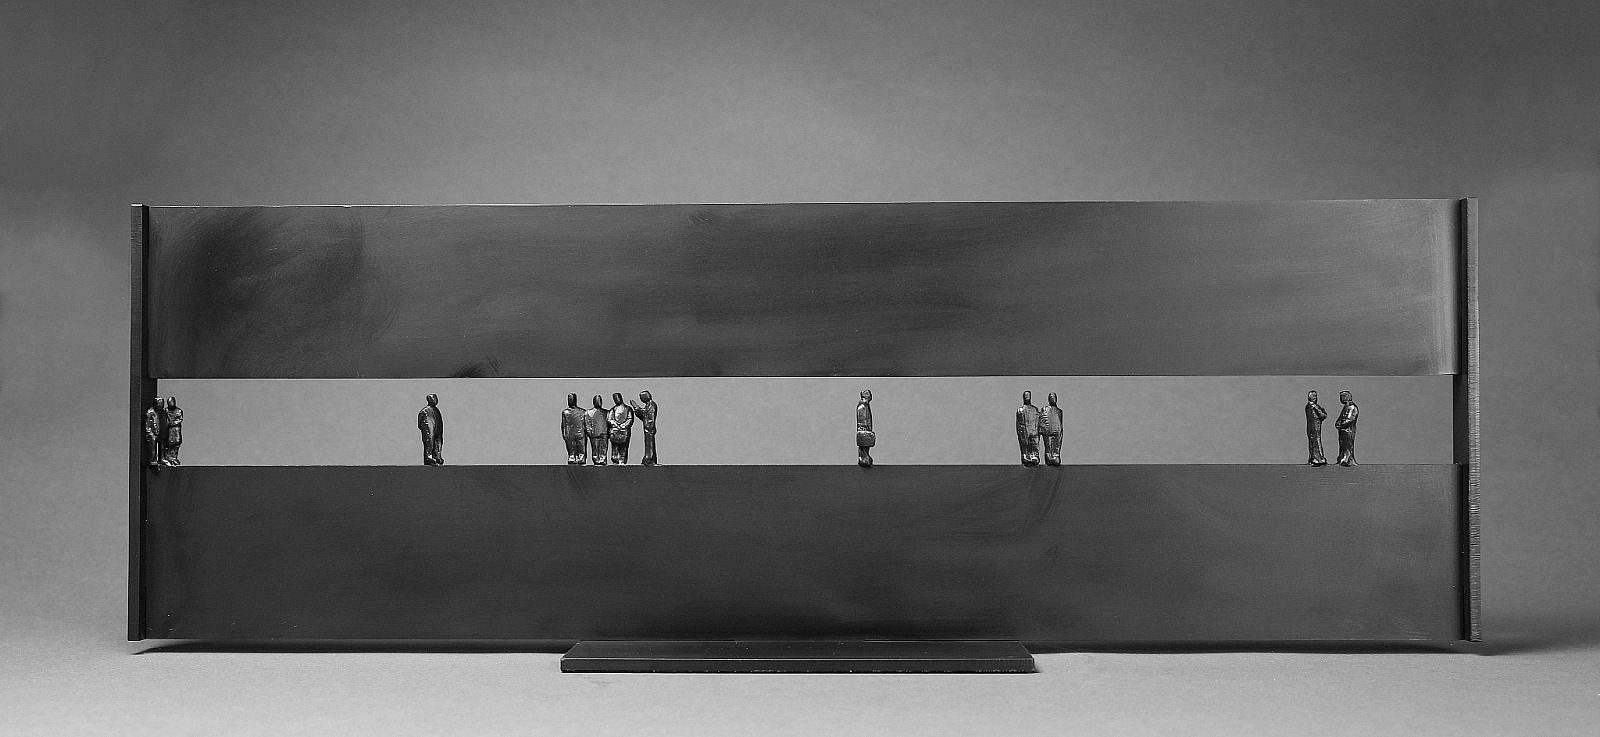 Jim Rennert, In Transit II, 2018
Bronze and steel, 10 x 30 x 6 in. Ed. of 9
RENN00010